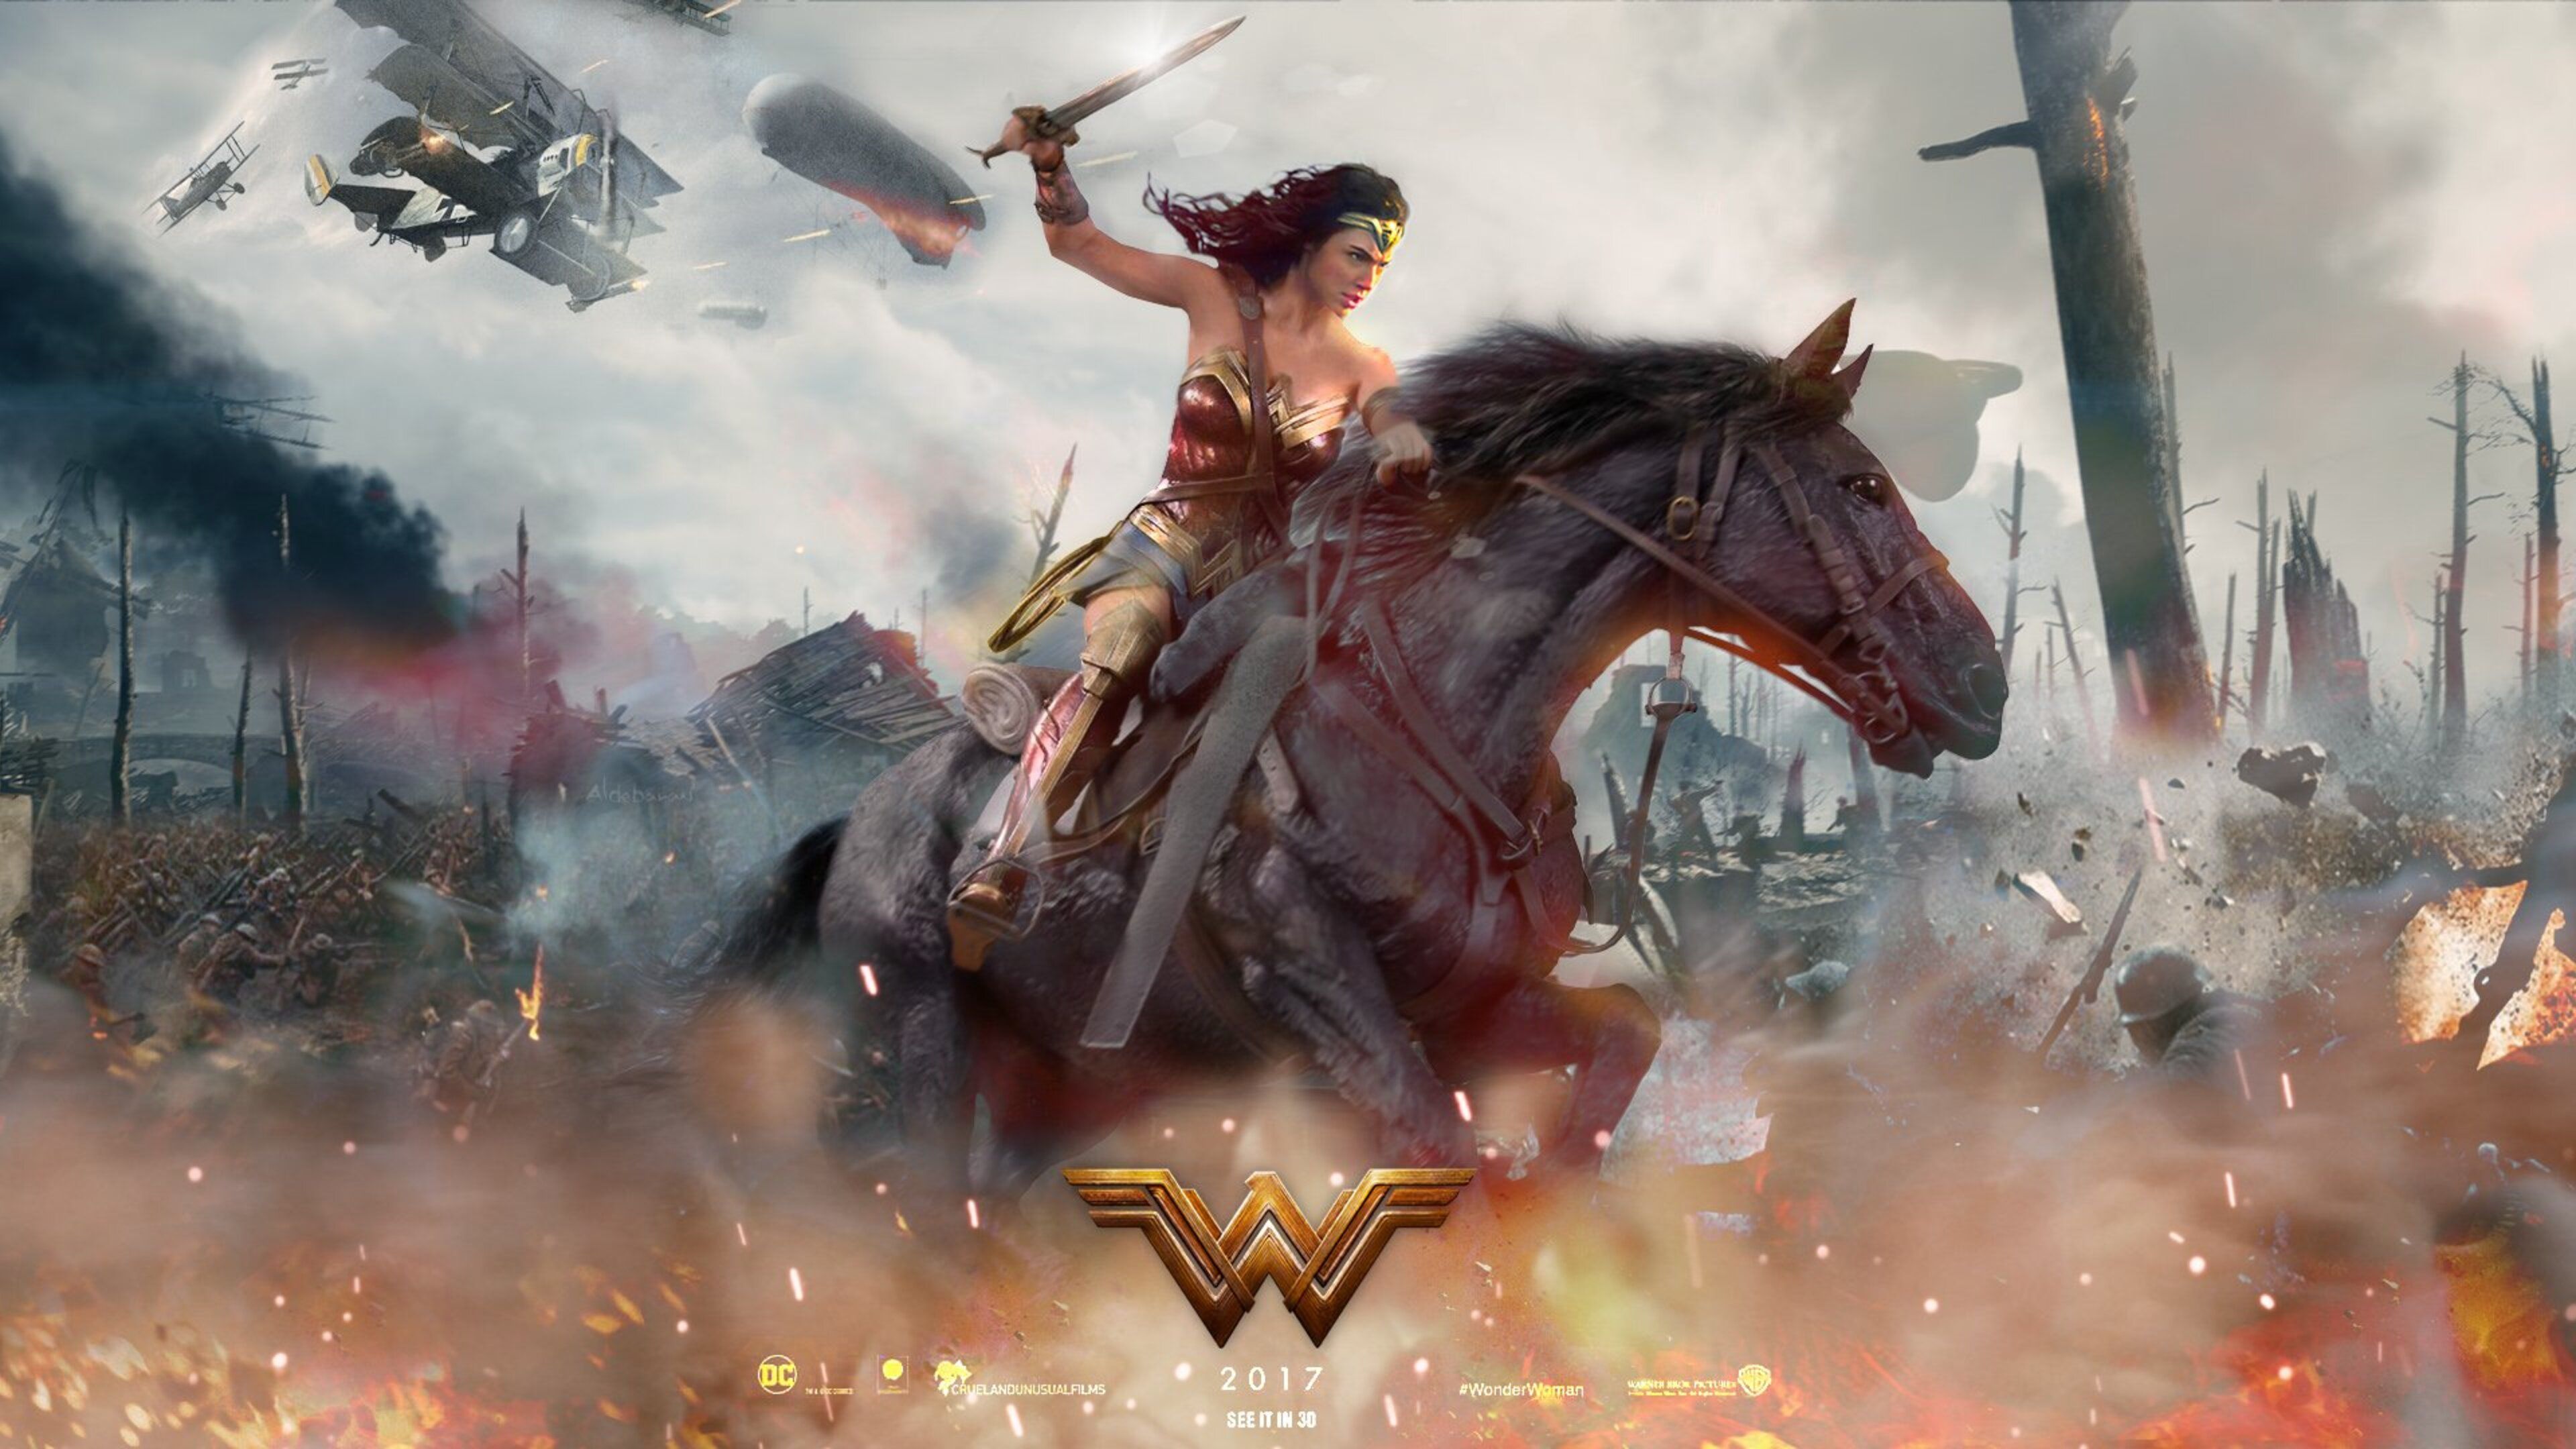 Wonder Woman Movie Fan Art 4k HD 4k Wallpaper, Image, Background, Photo and Picture